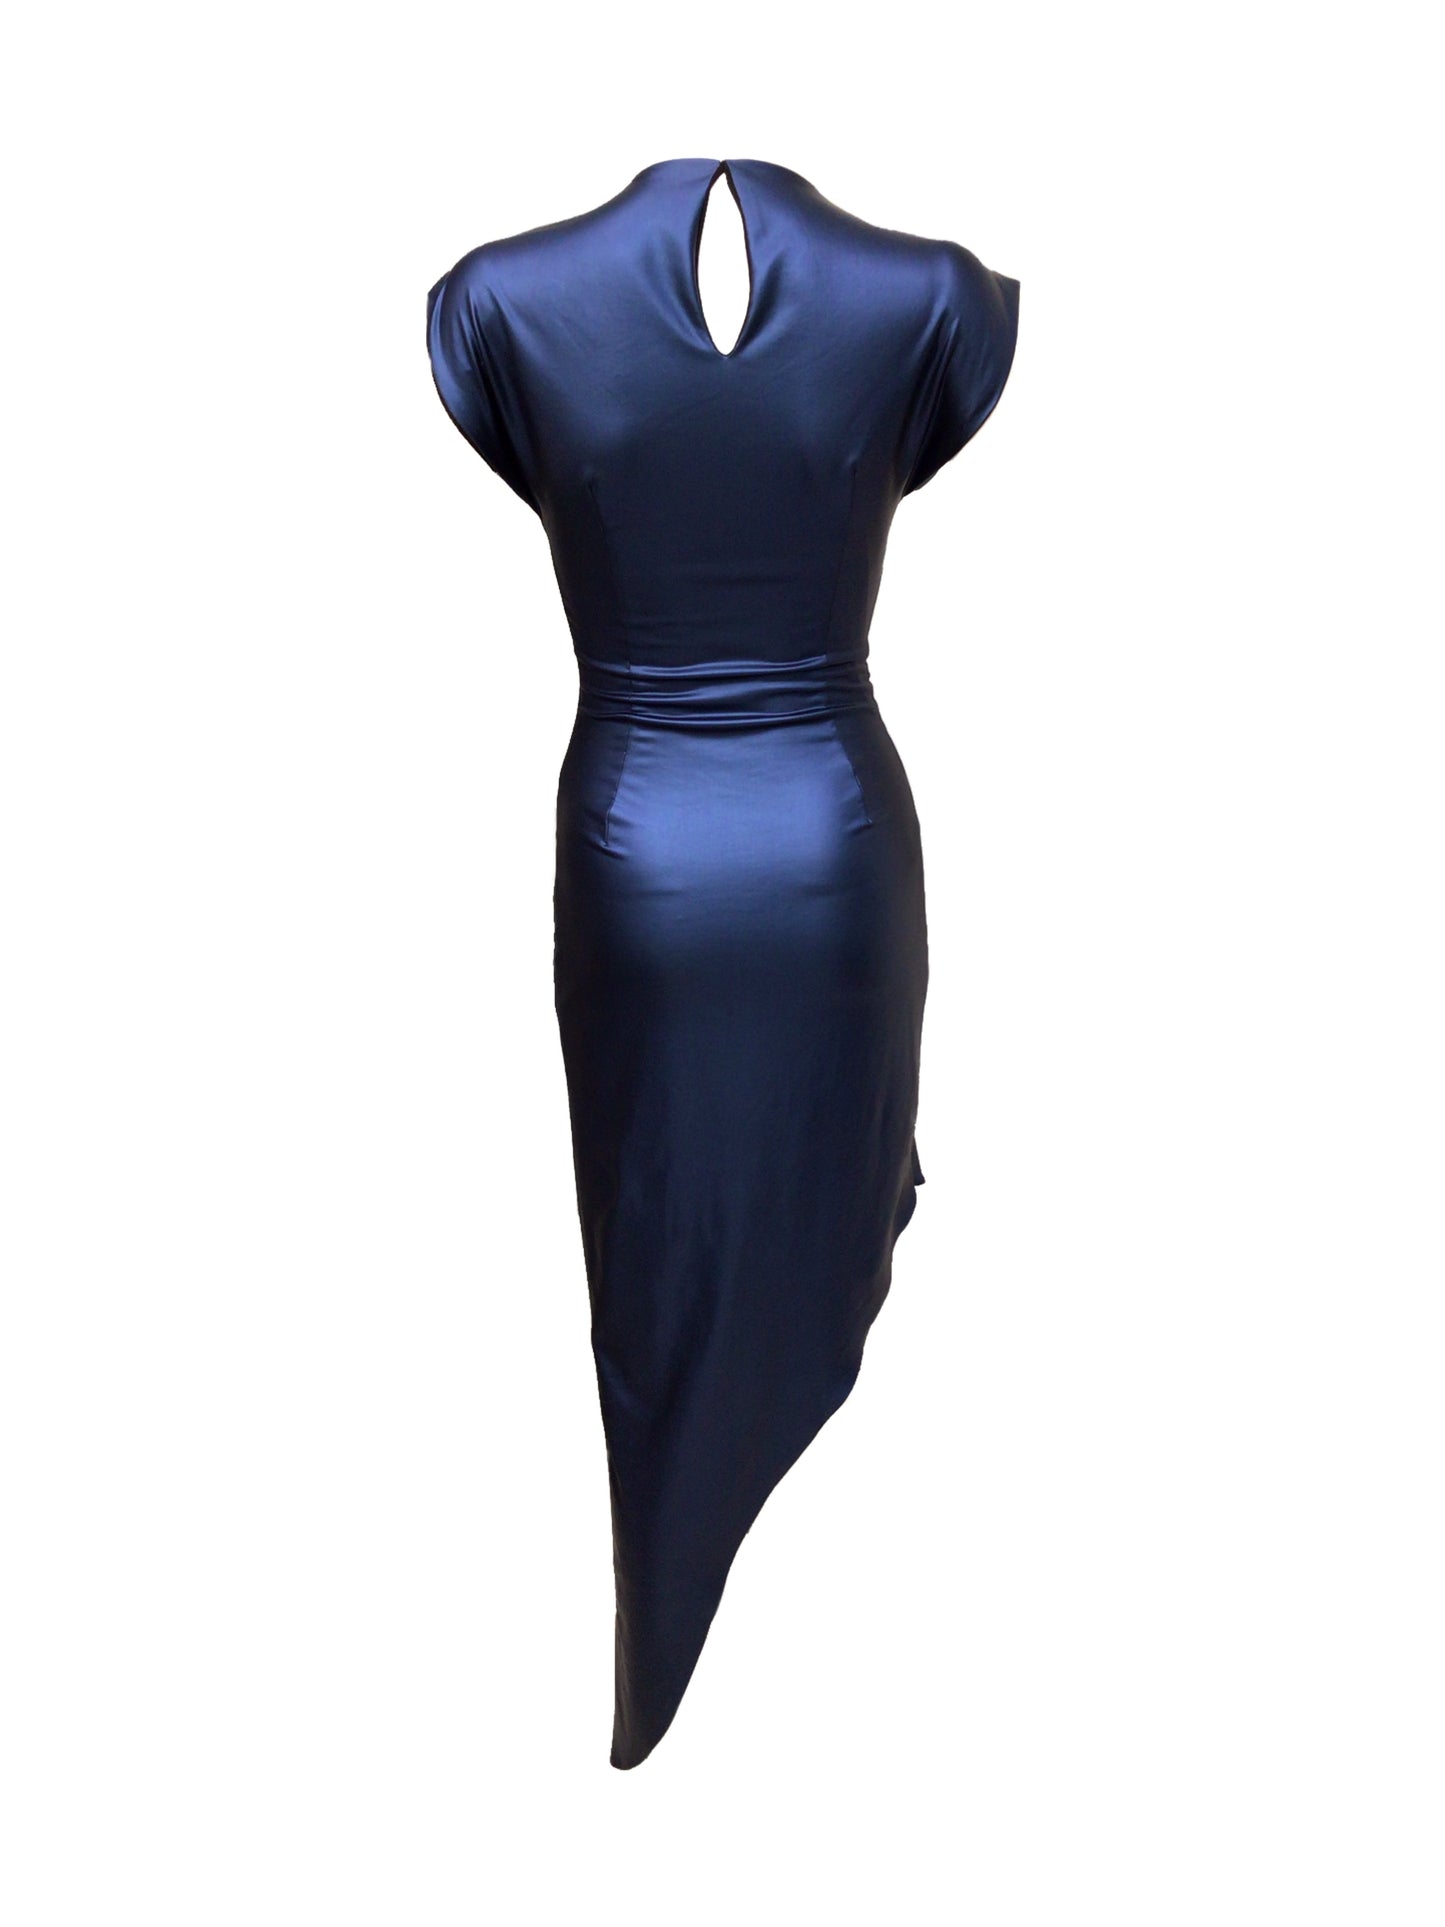 Electric Blue Pleather Dress